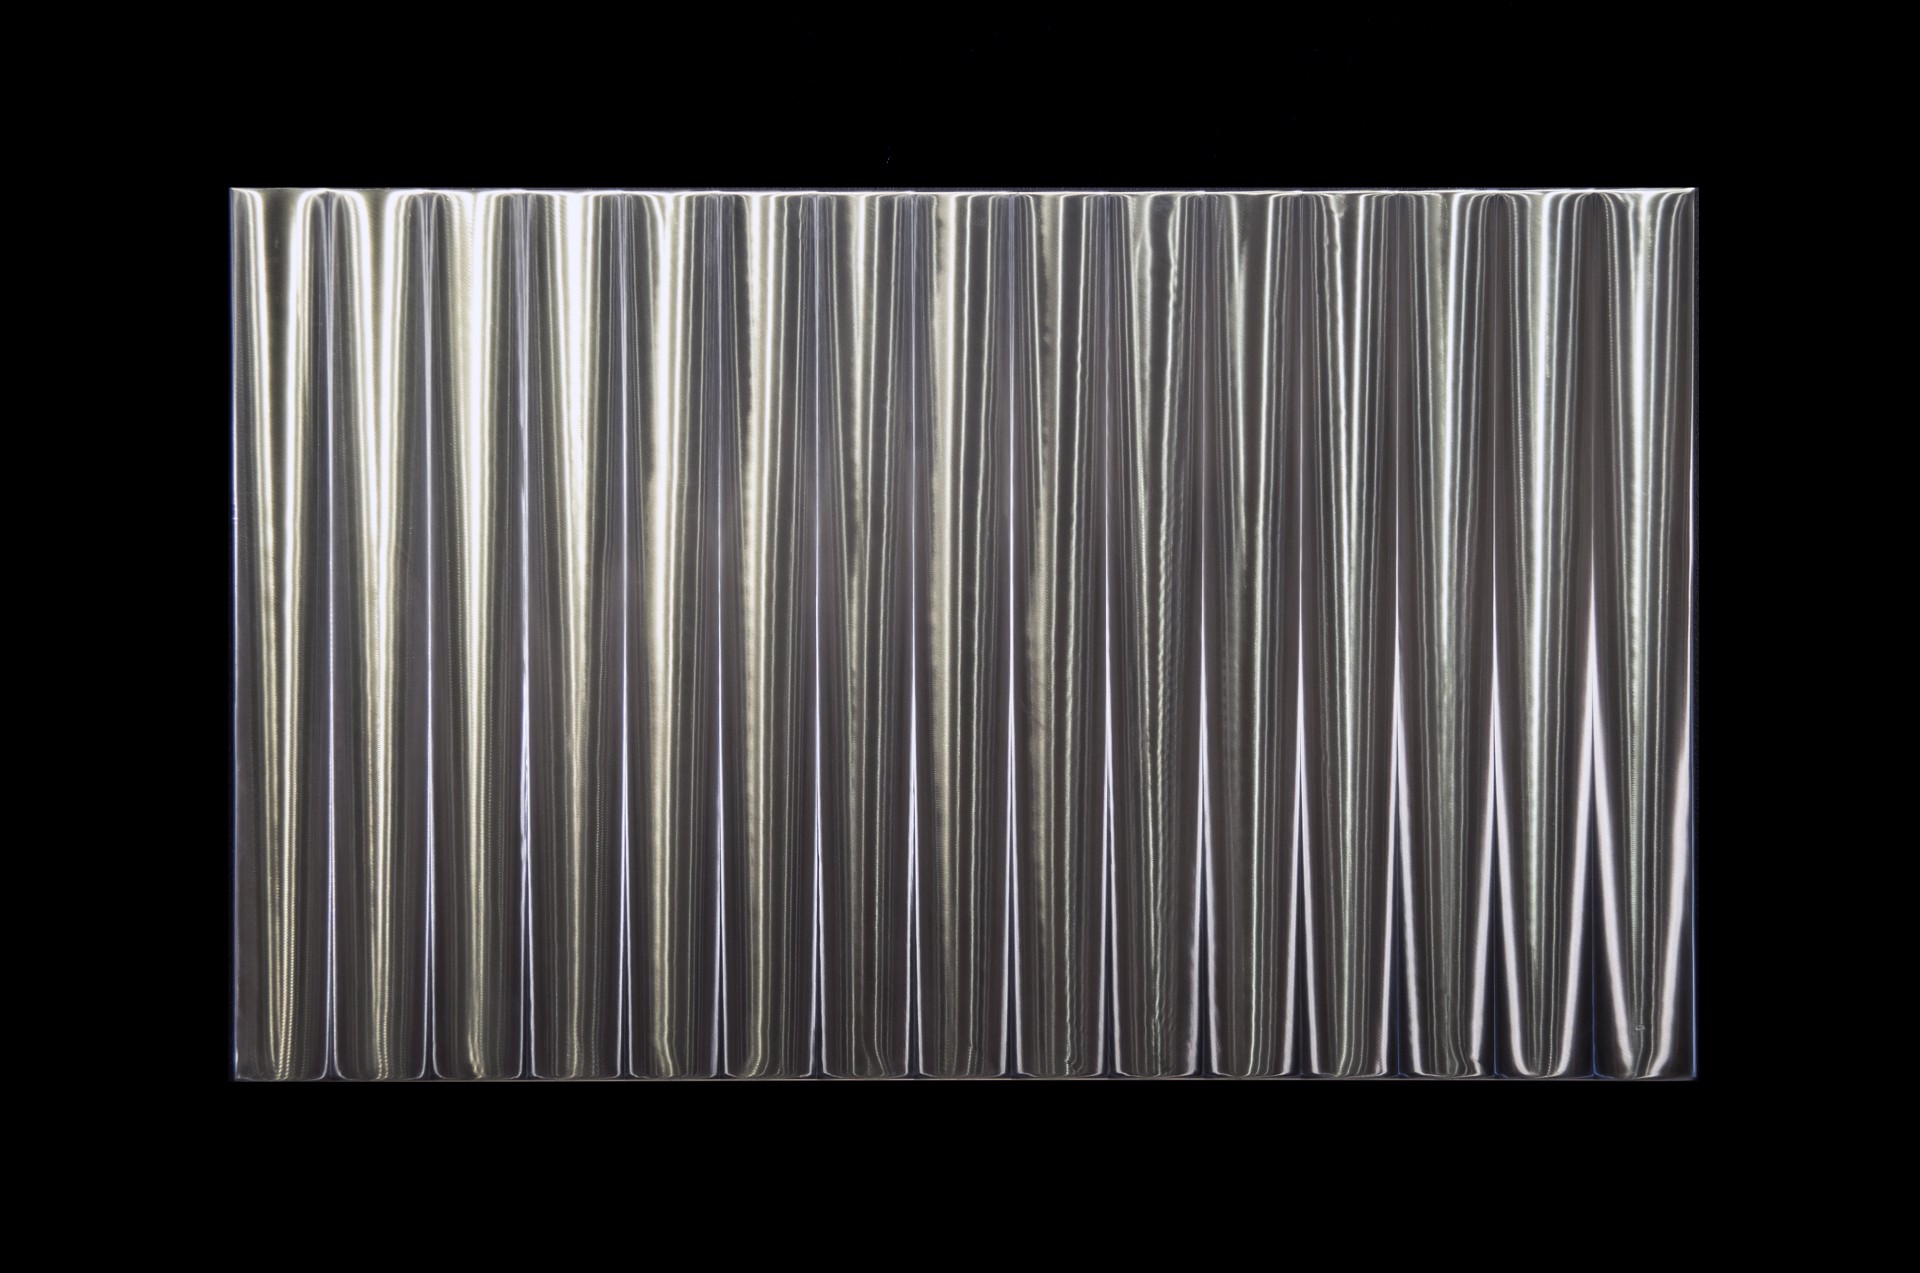 Stripes by Bruce R. MacDonald